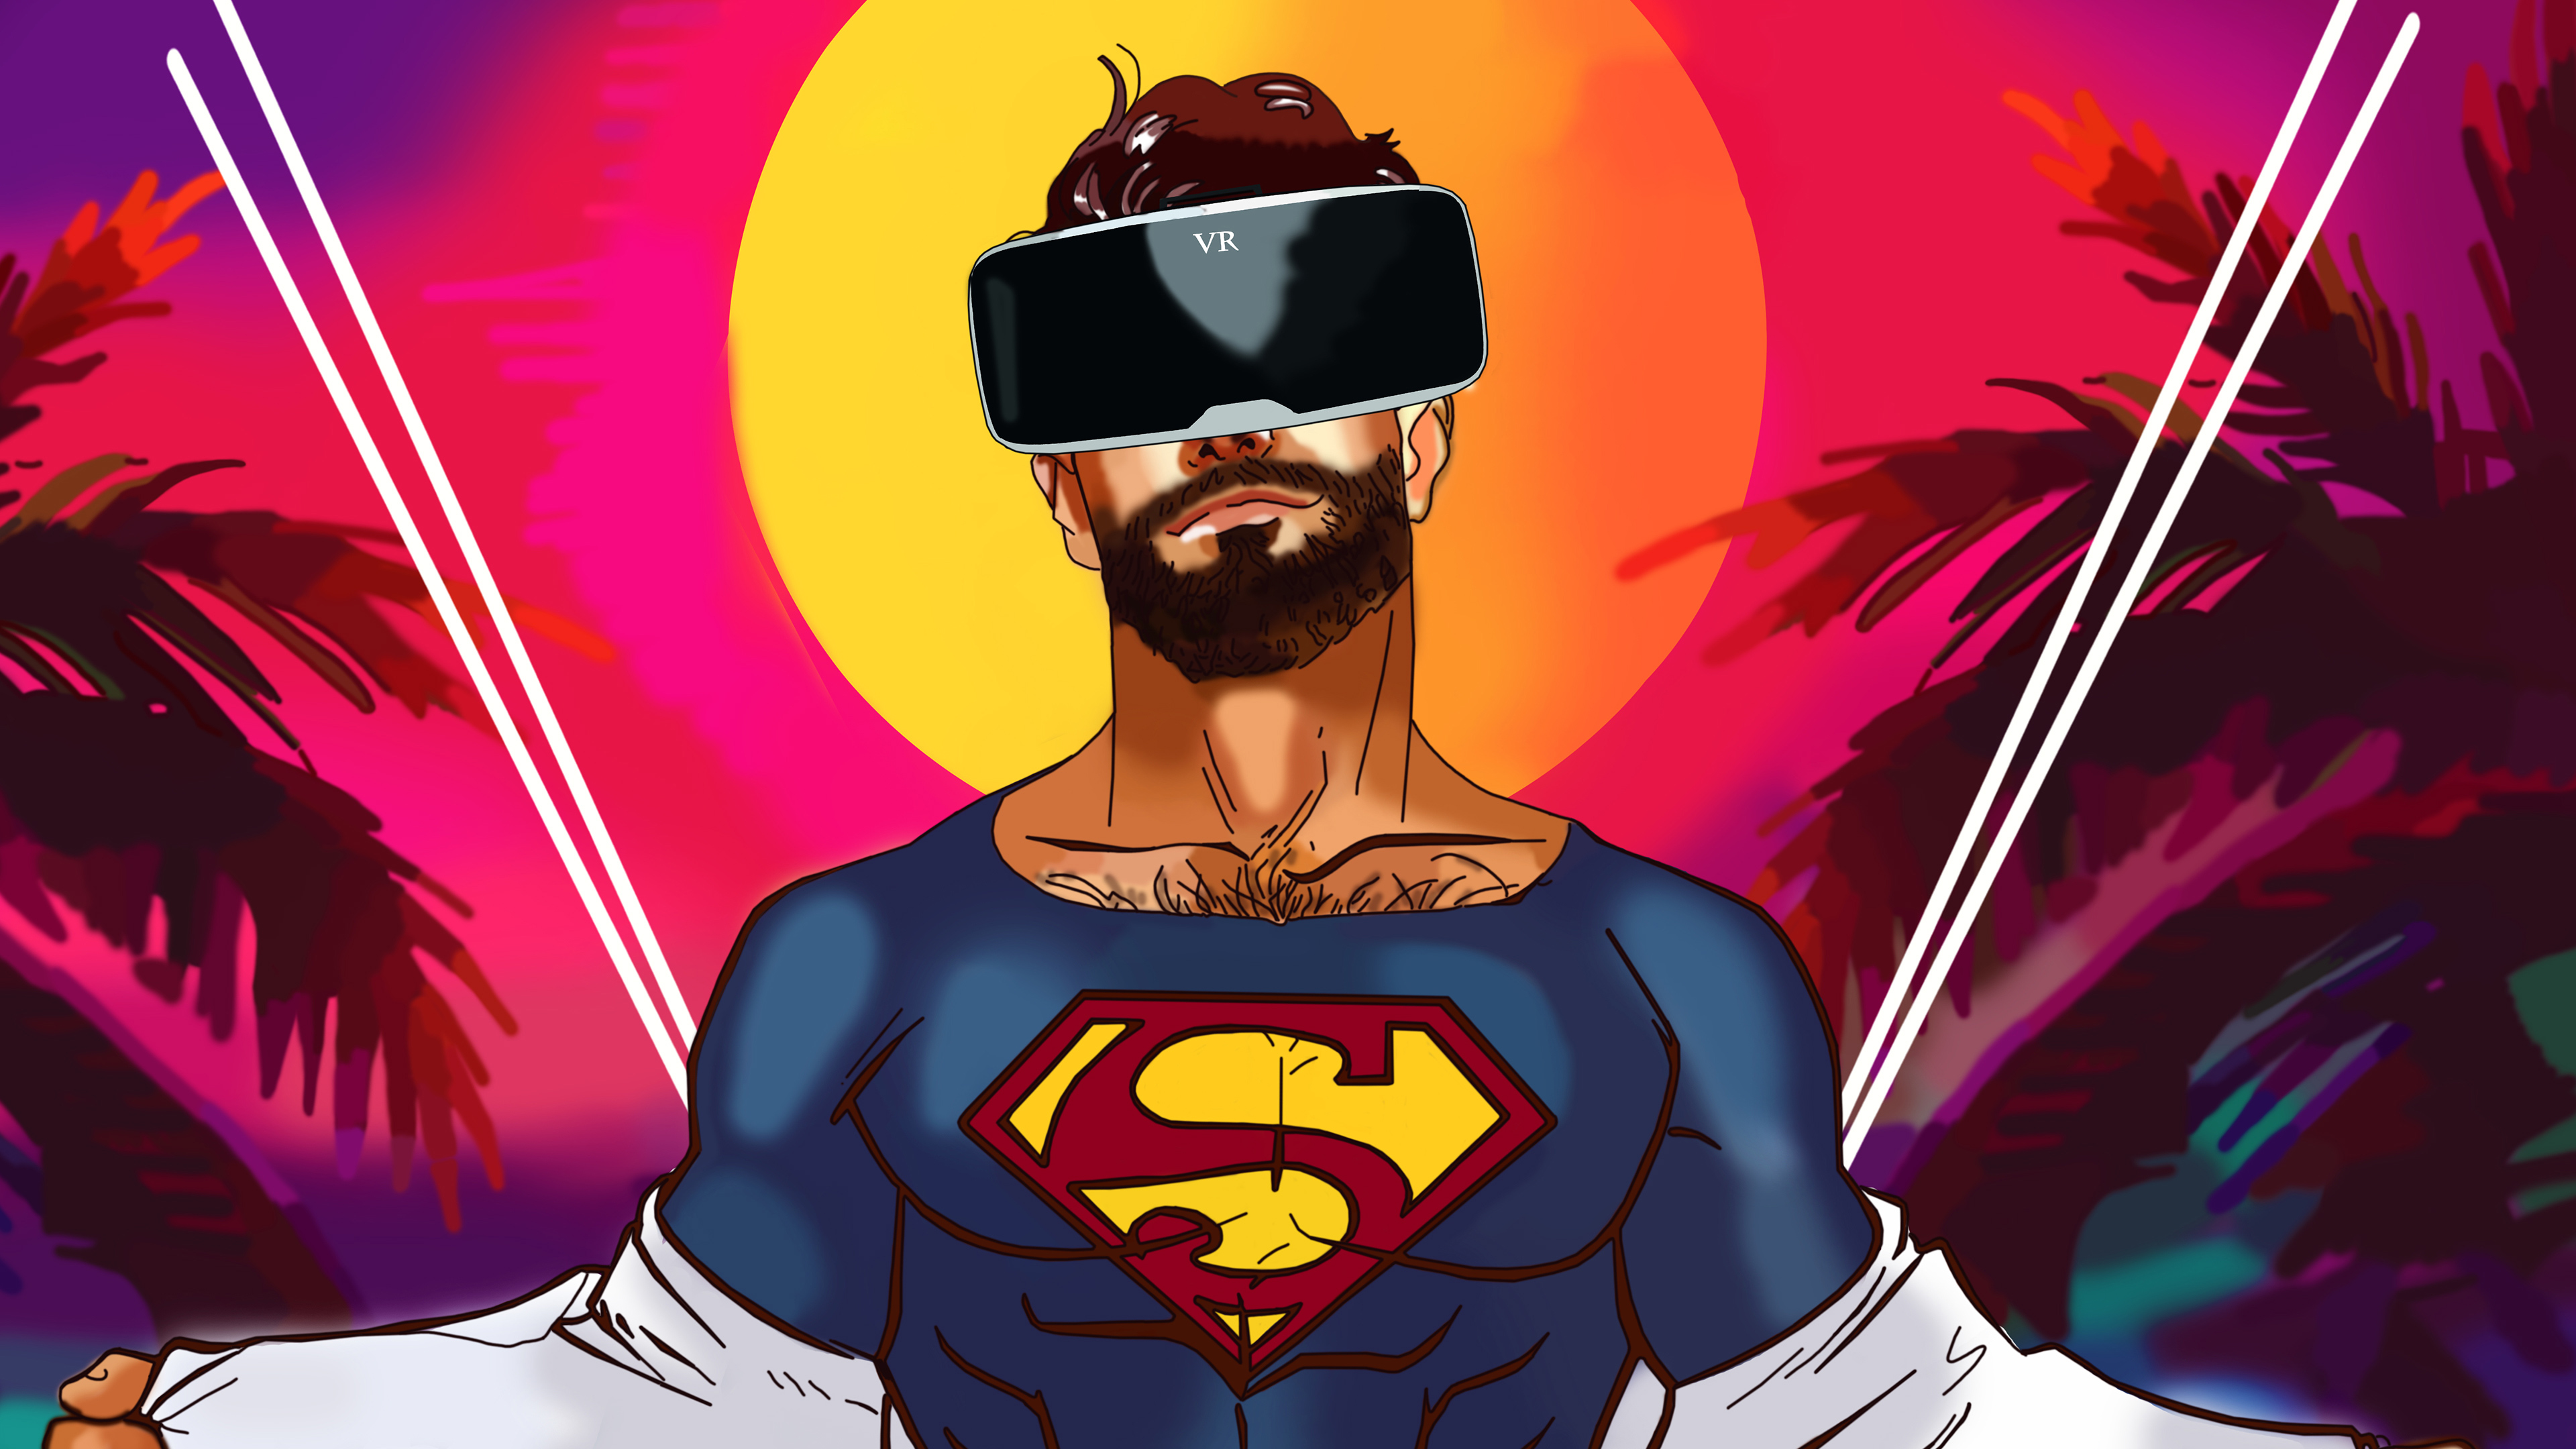 Superman Using Vr Headset 4k - Superman Vr - HD Wallpaper 